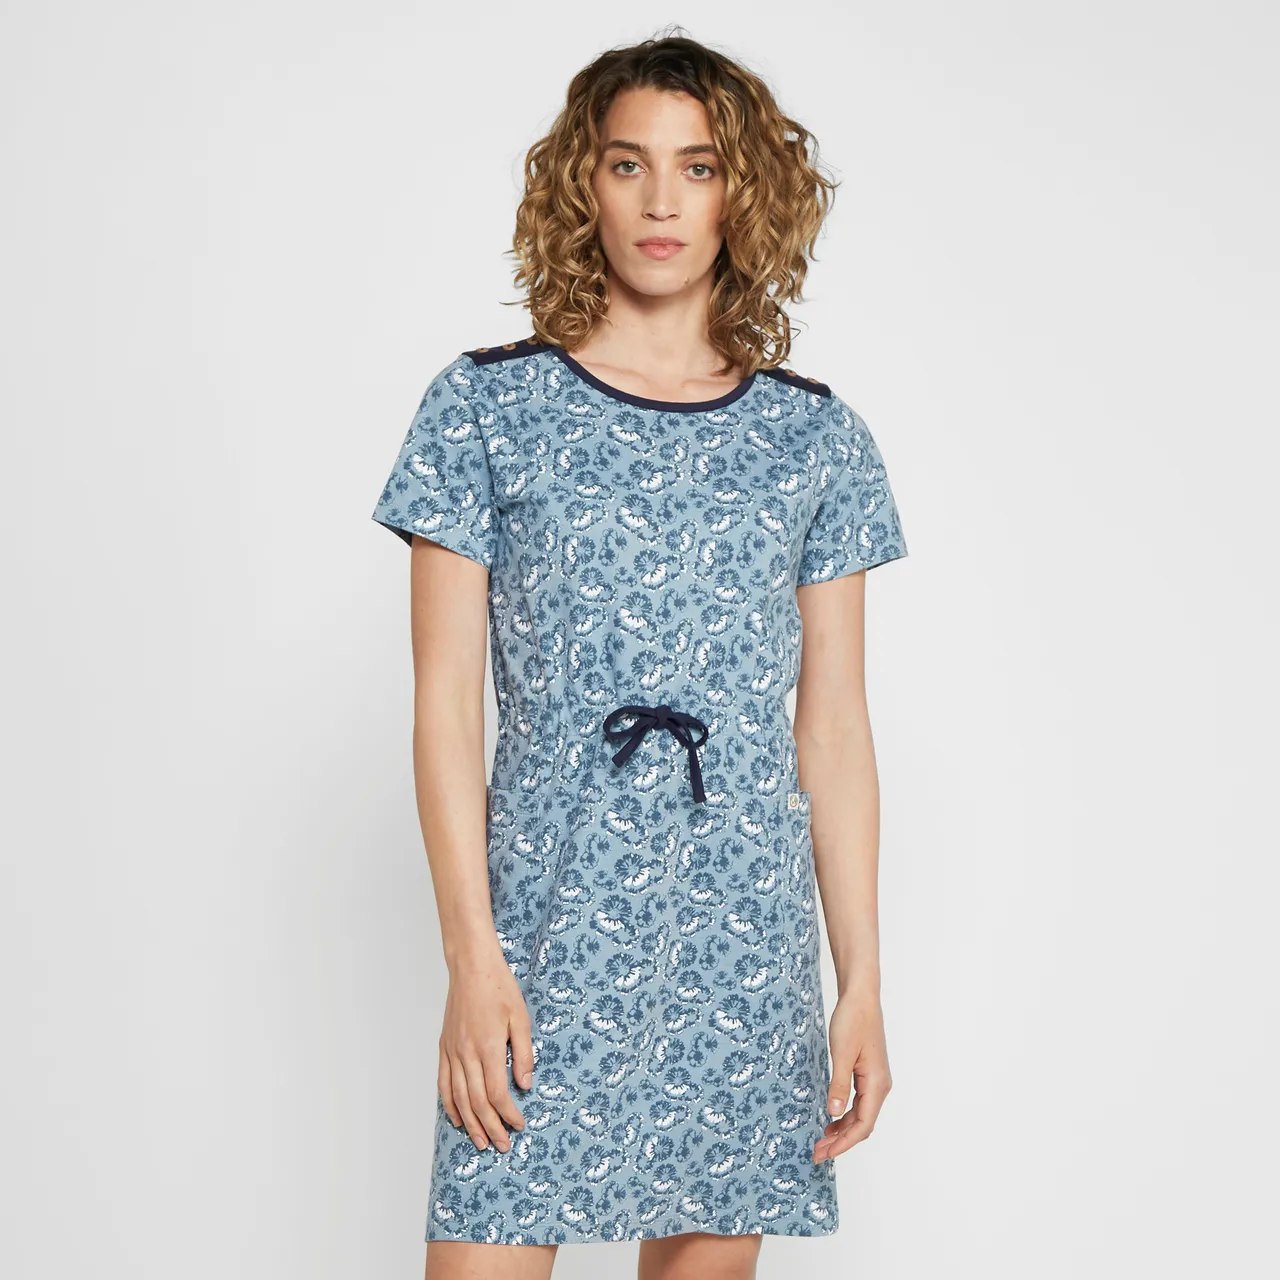 Printed Jersey Dress, Navy